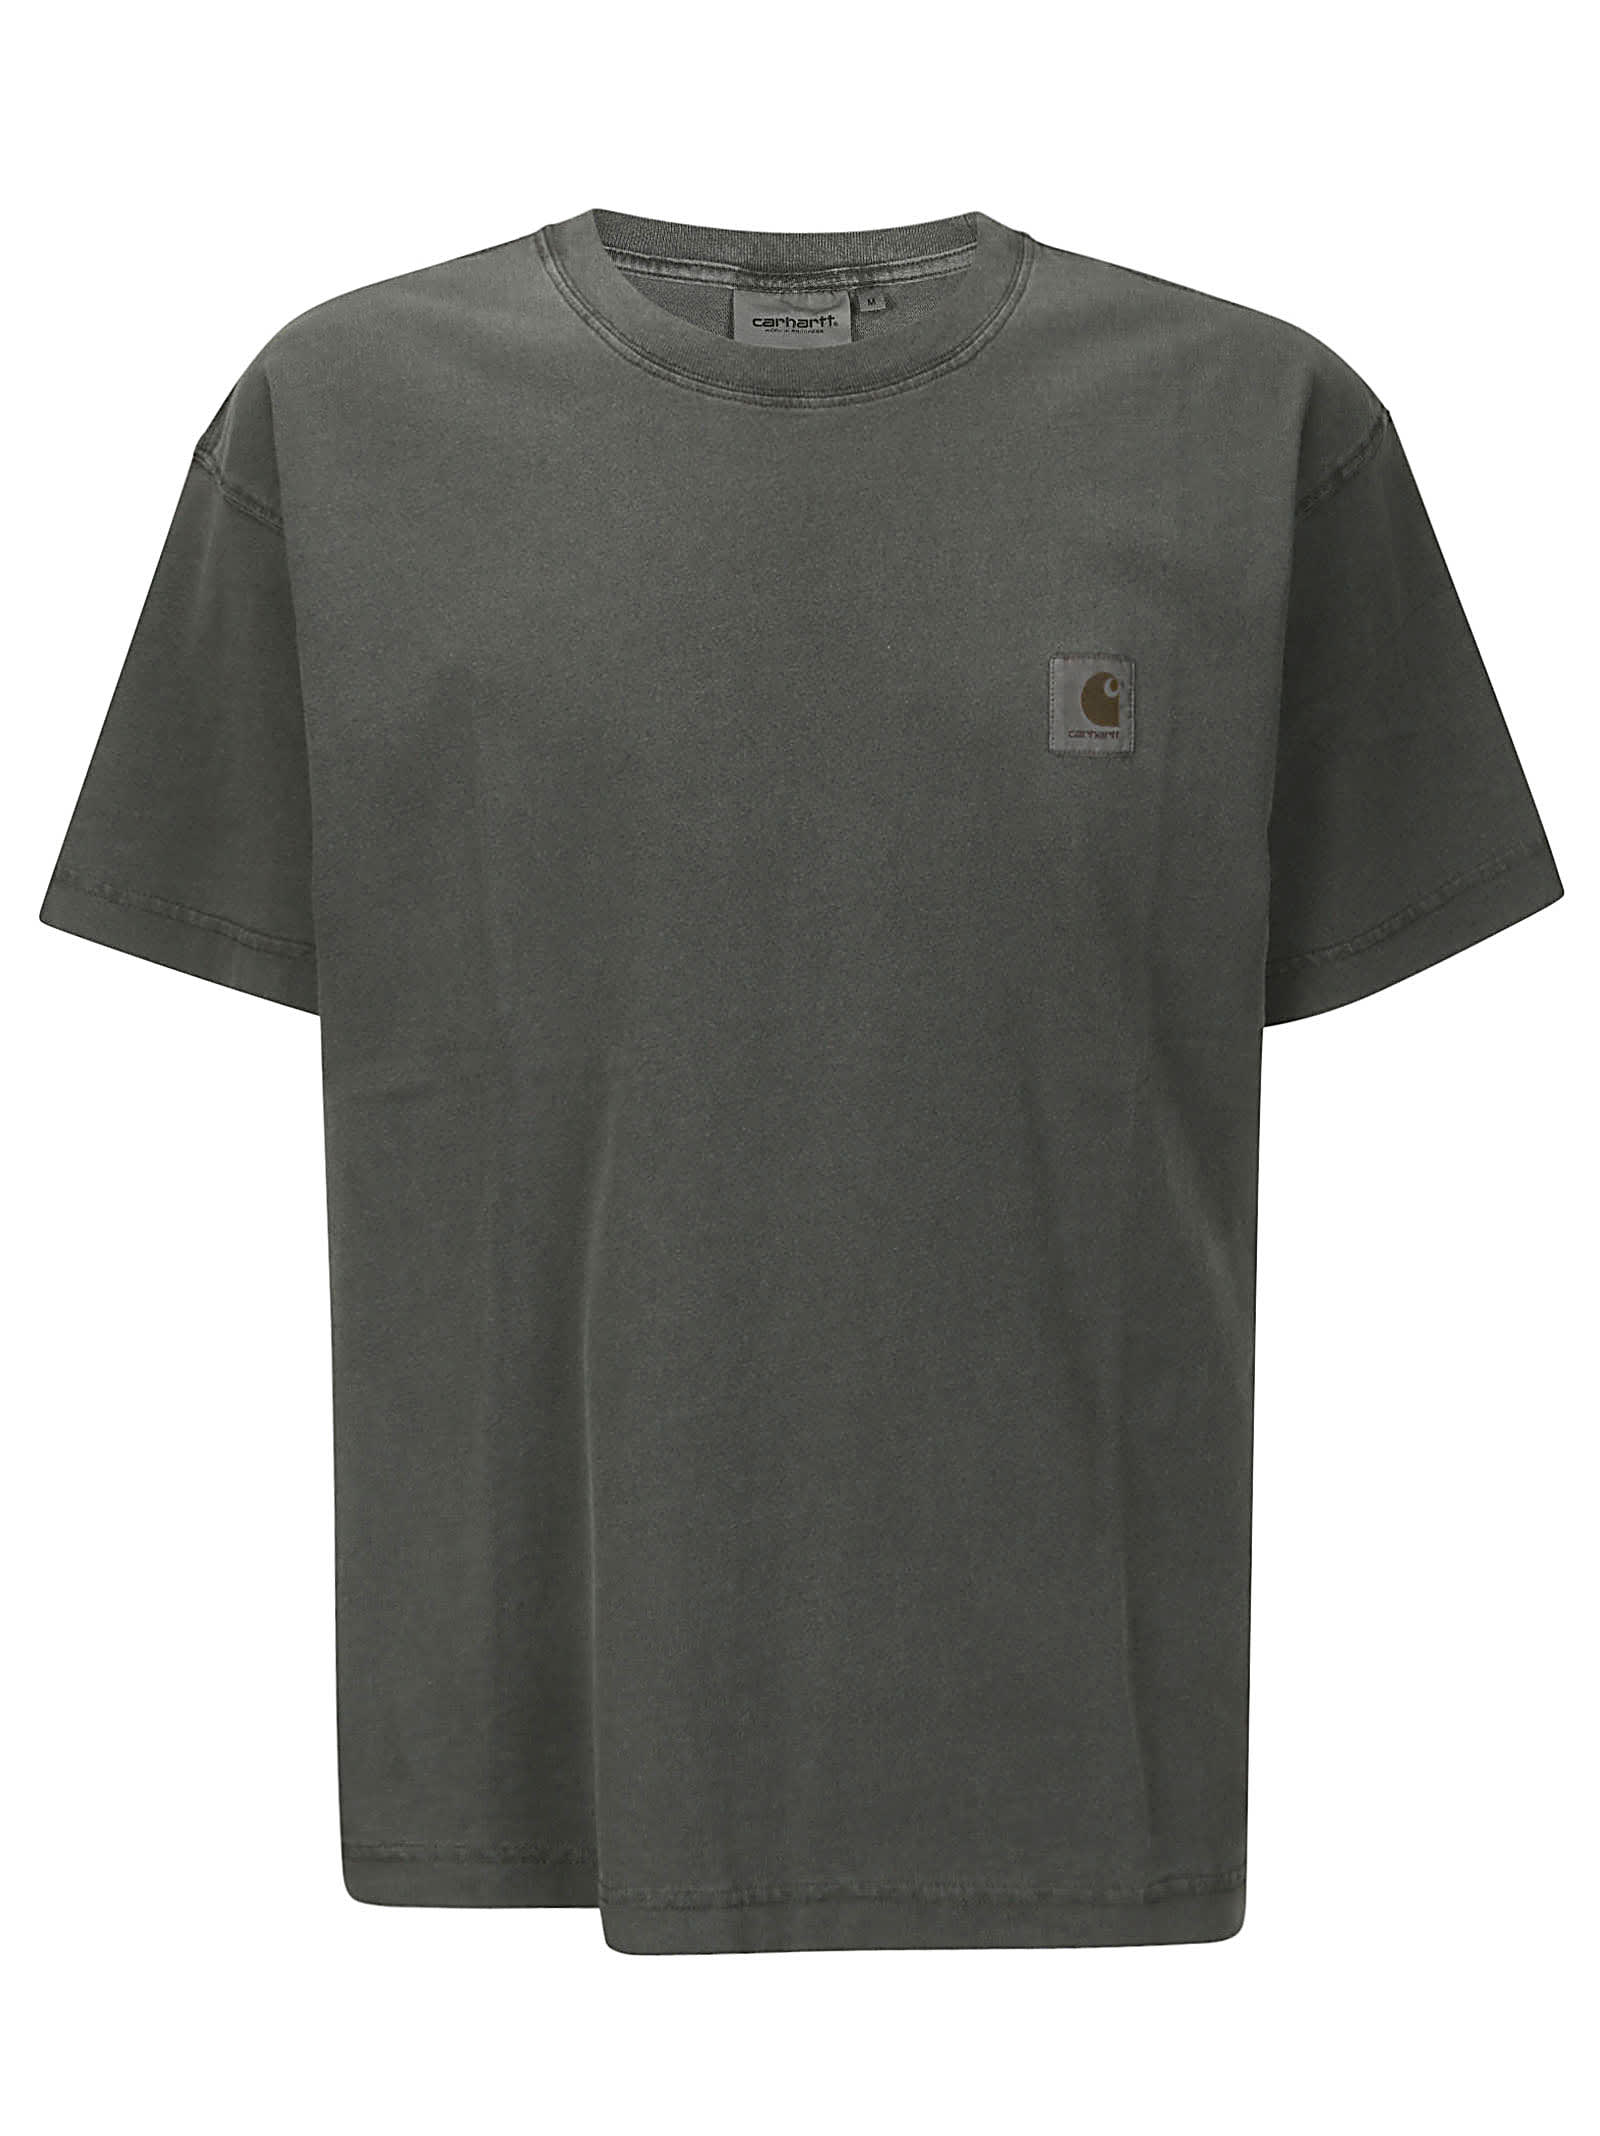 S/s Nelson T-shirt Cotton Single Jersey